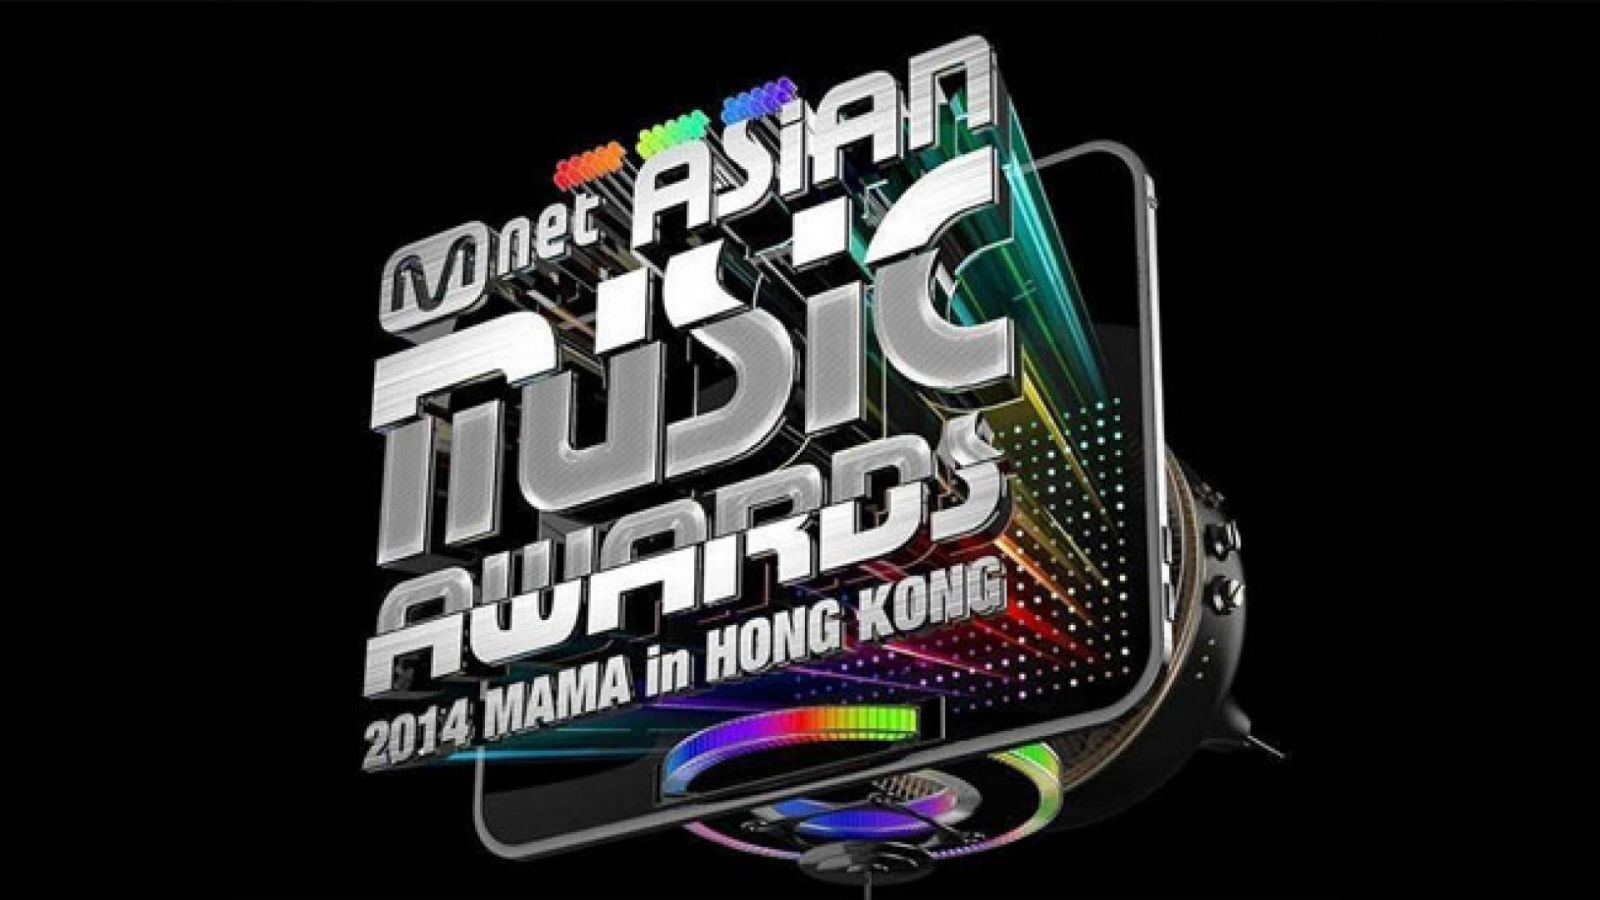 Vencedores do MAMA 2014 © Mnet Asian Music Awards